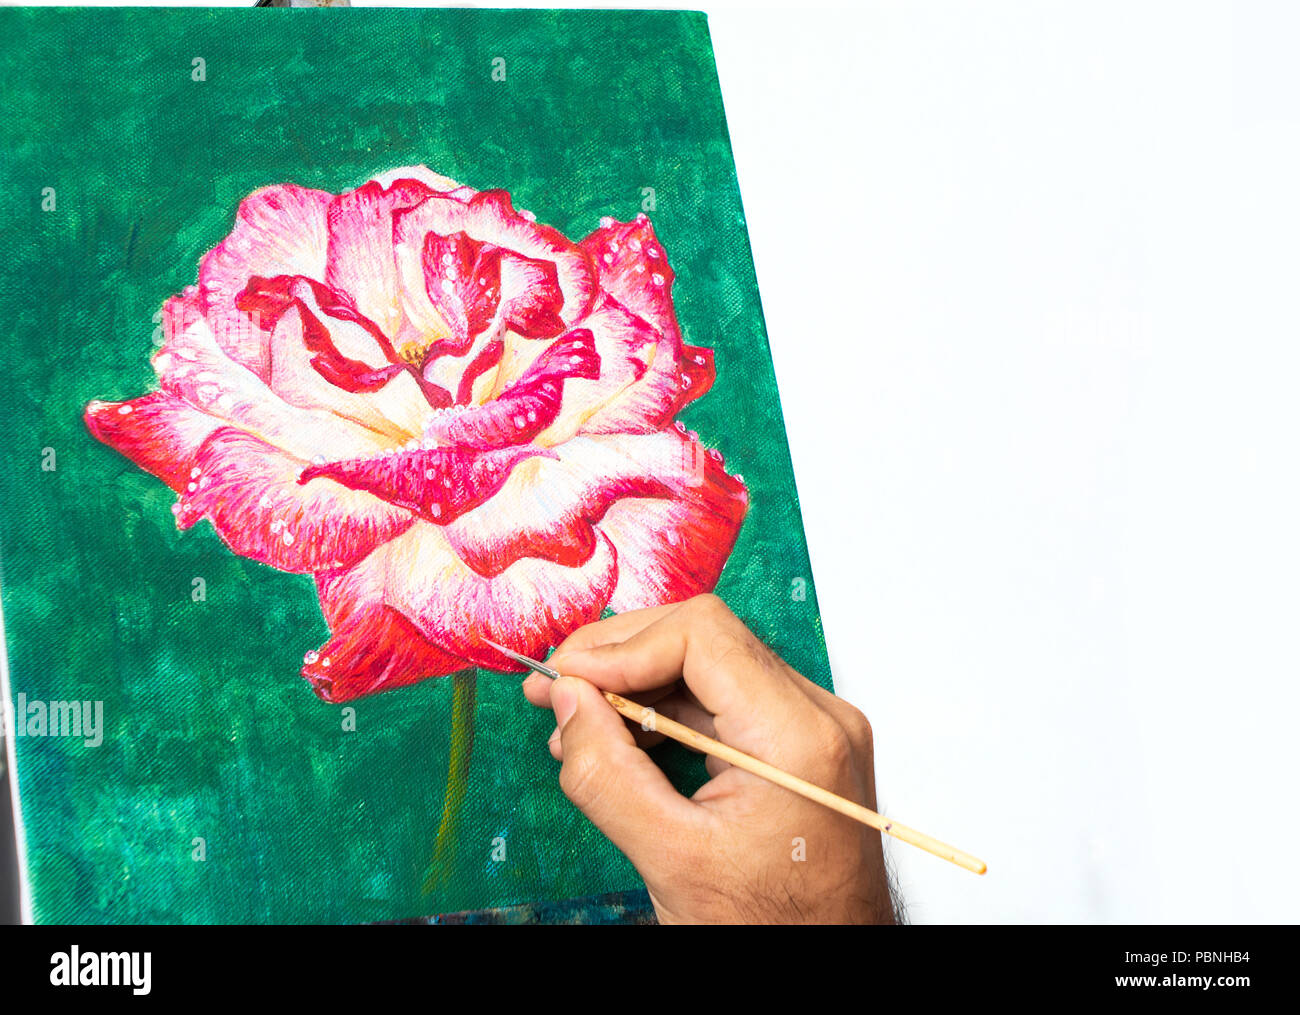 Pintura Acrílica Rosa Roja Fotos e Imágenes de stock - Alamy